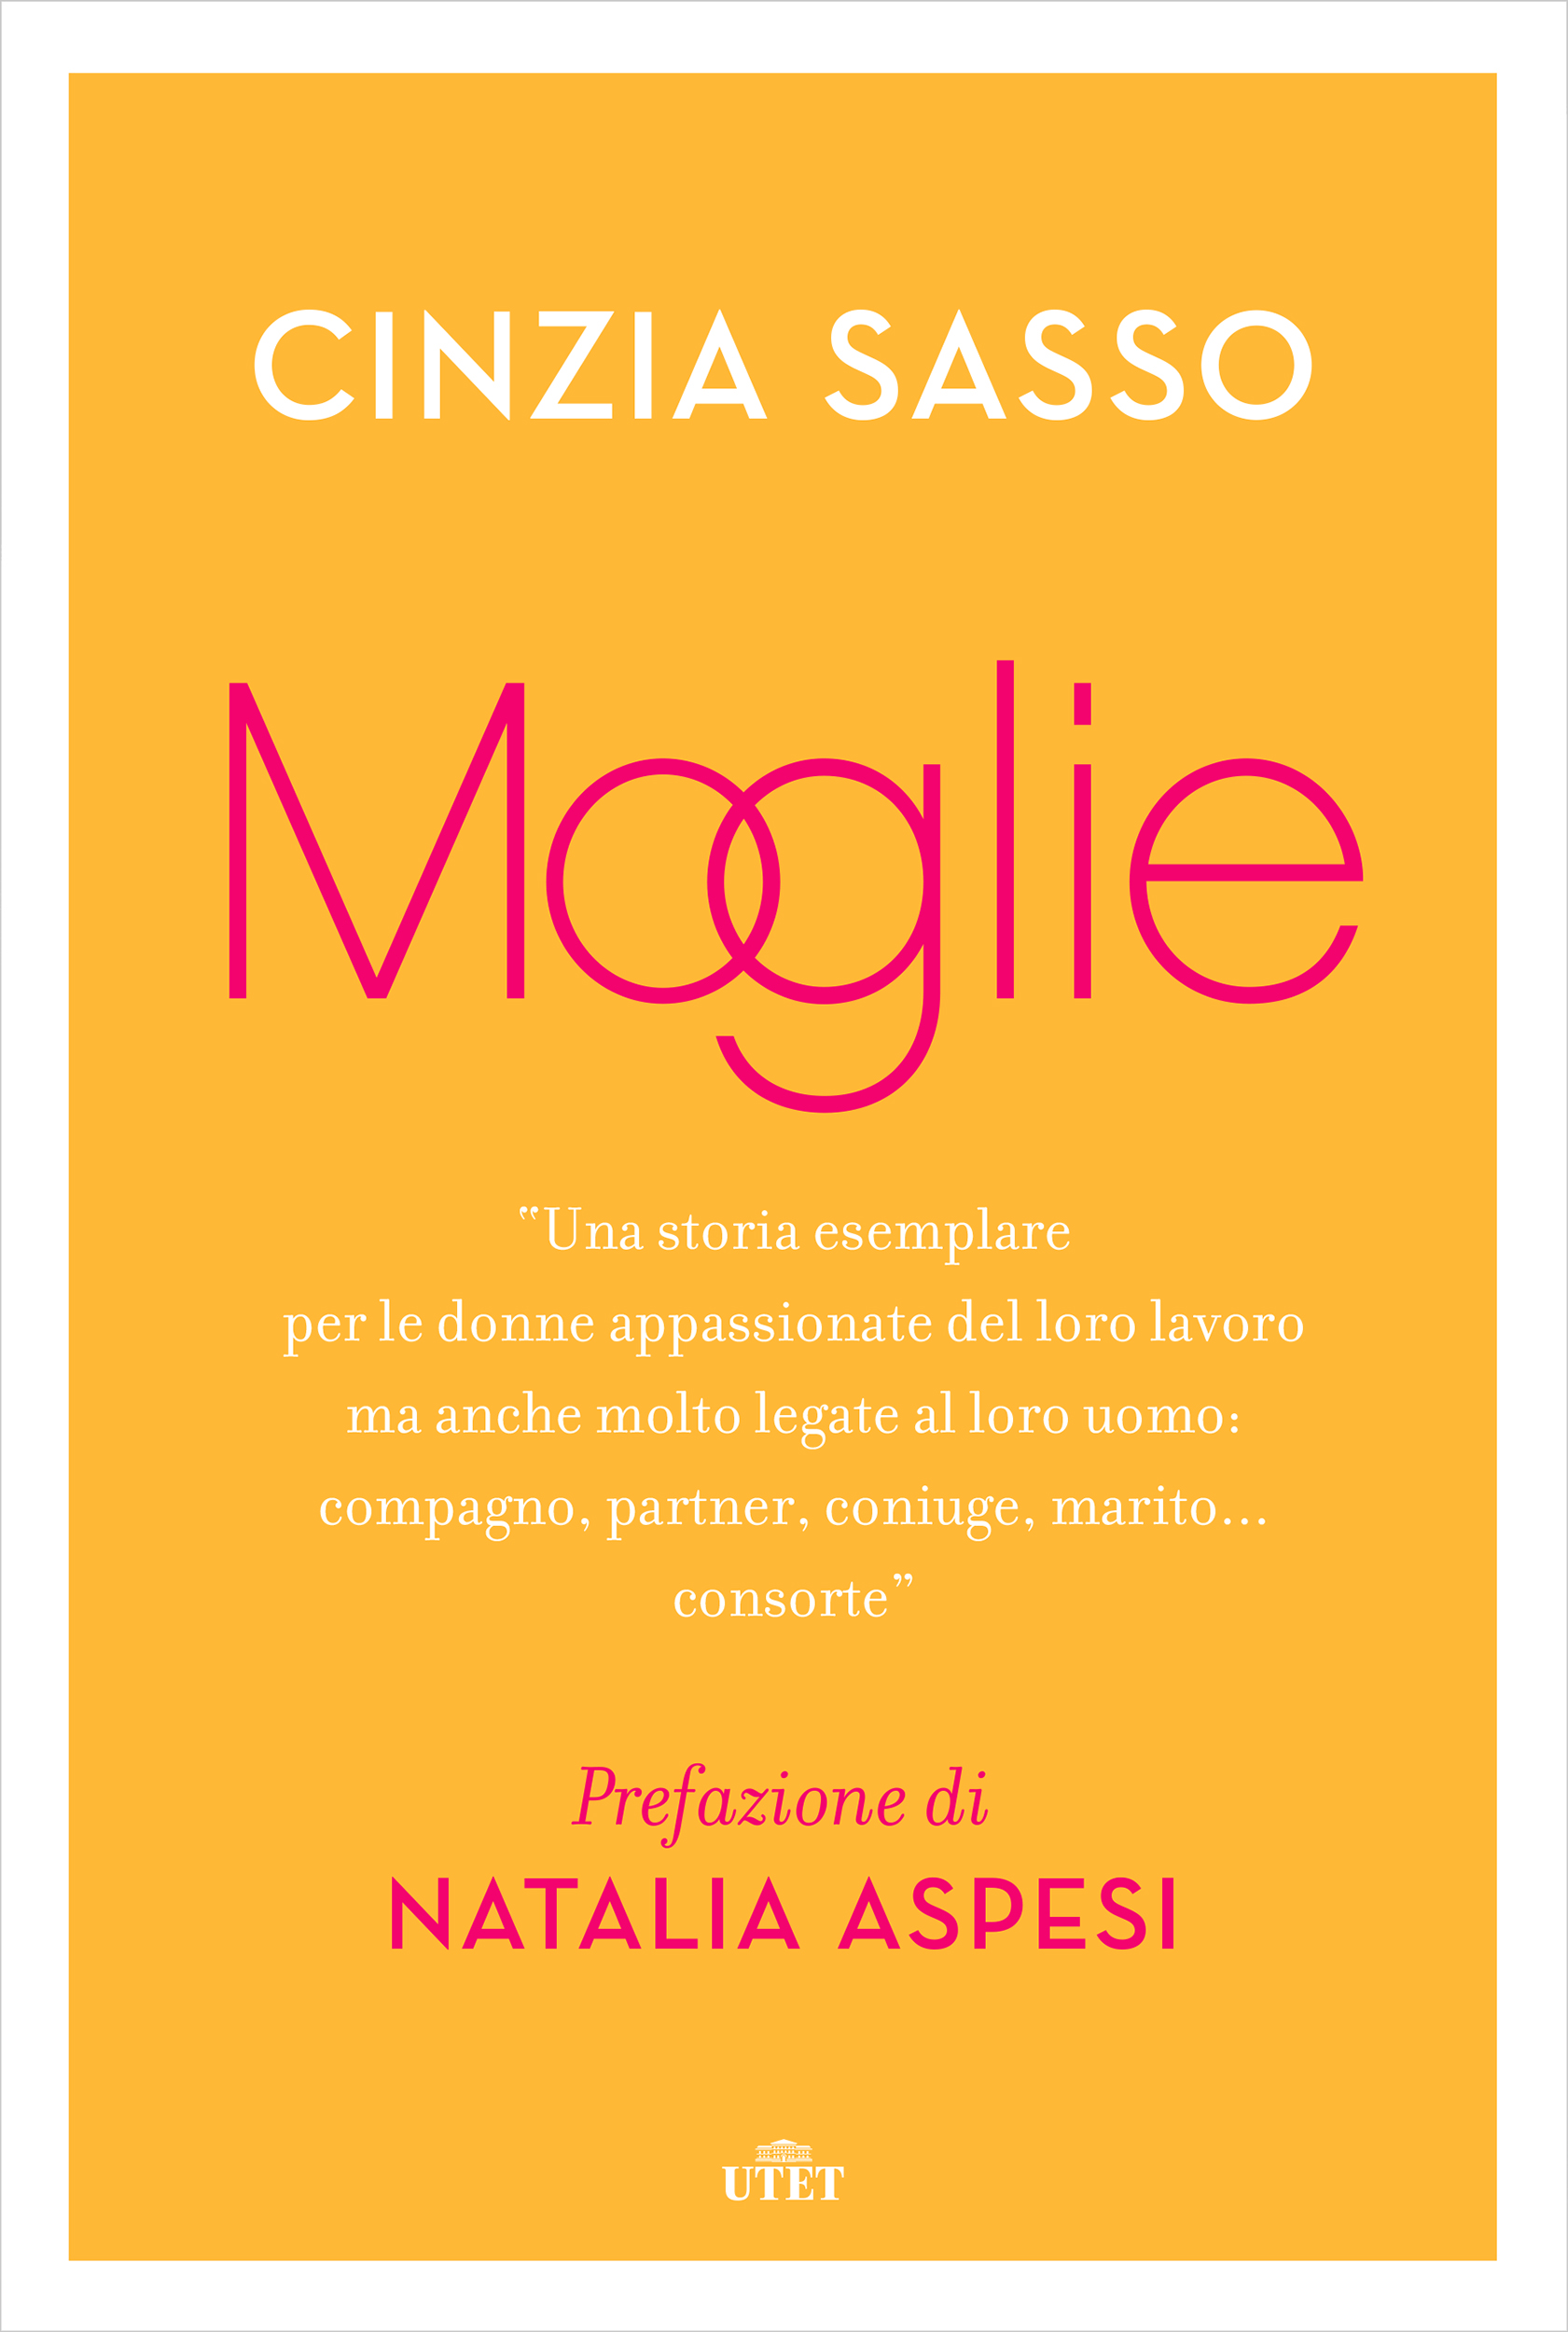 Book Launch: "Moglie" by Cinzia Sasso